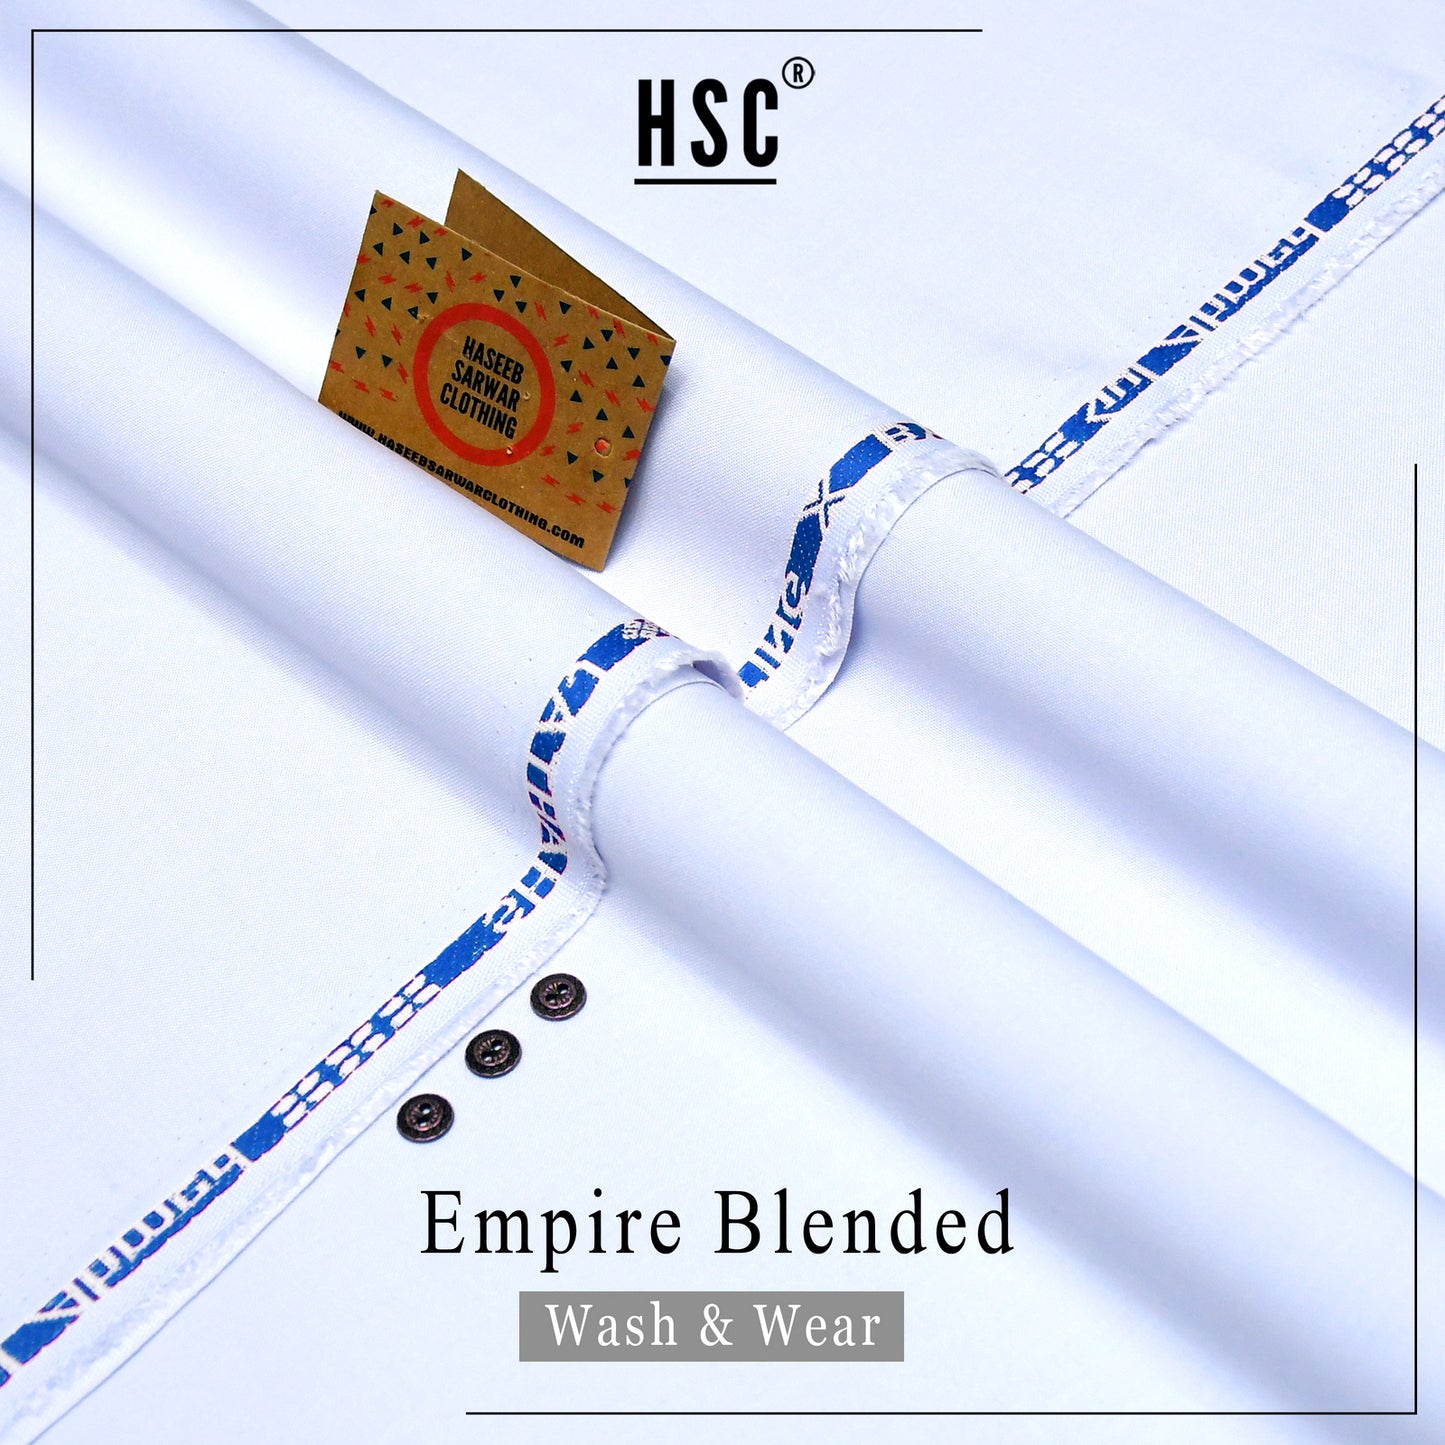 Buy 1 Get 1 Free Empire Blended Wash&Wear - EBW7 HSC